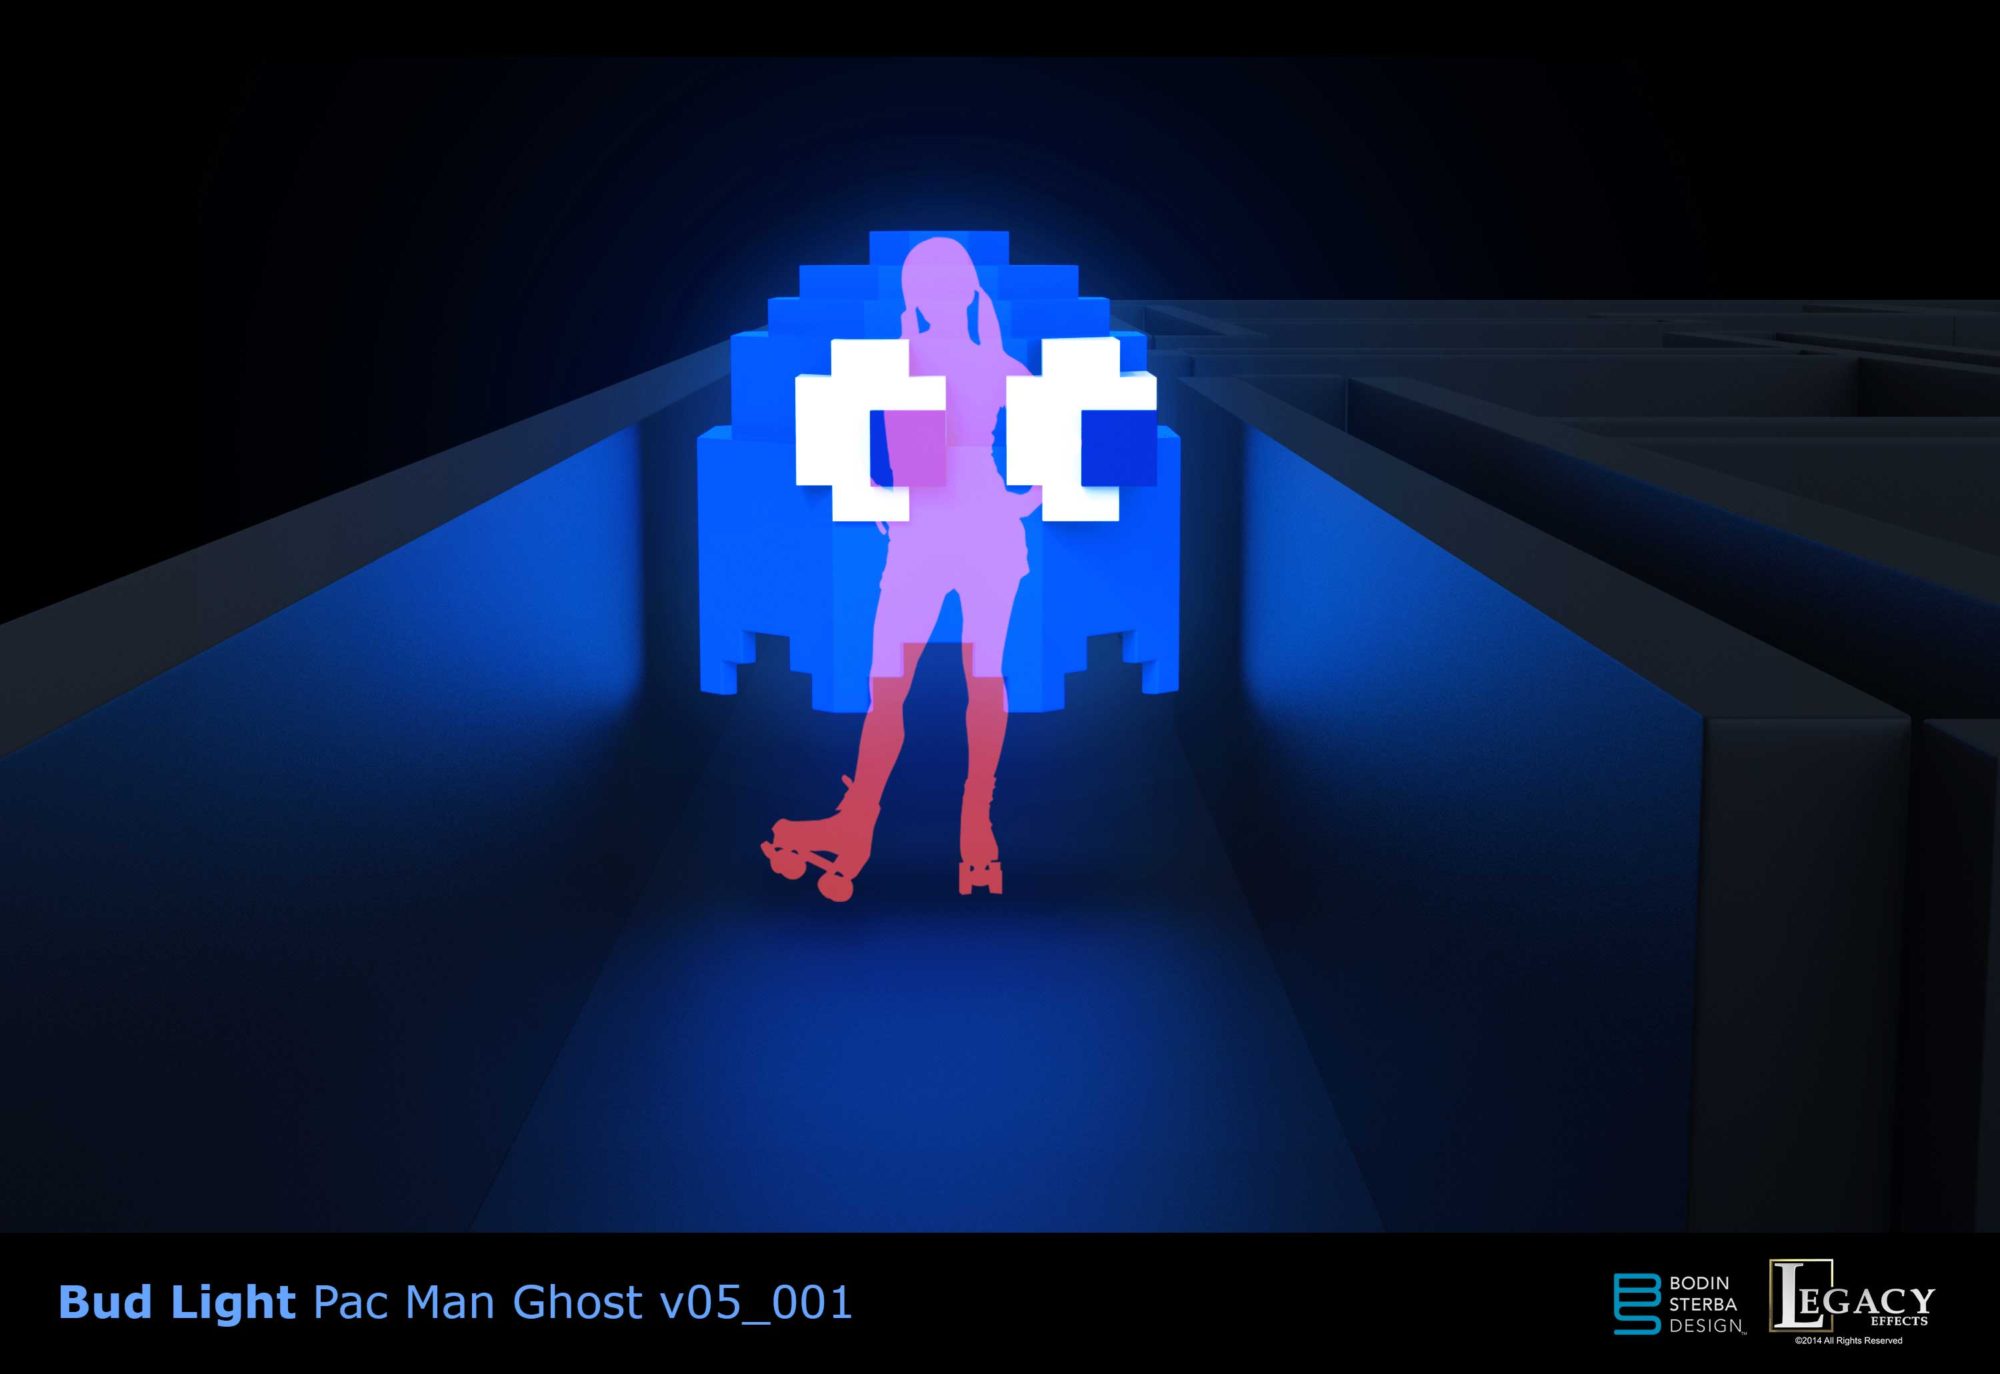 3D Pac Man ghost design for Bud Lite Superbowl 2015 commercial